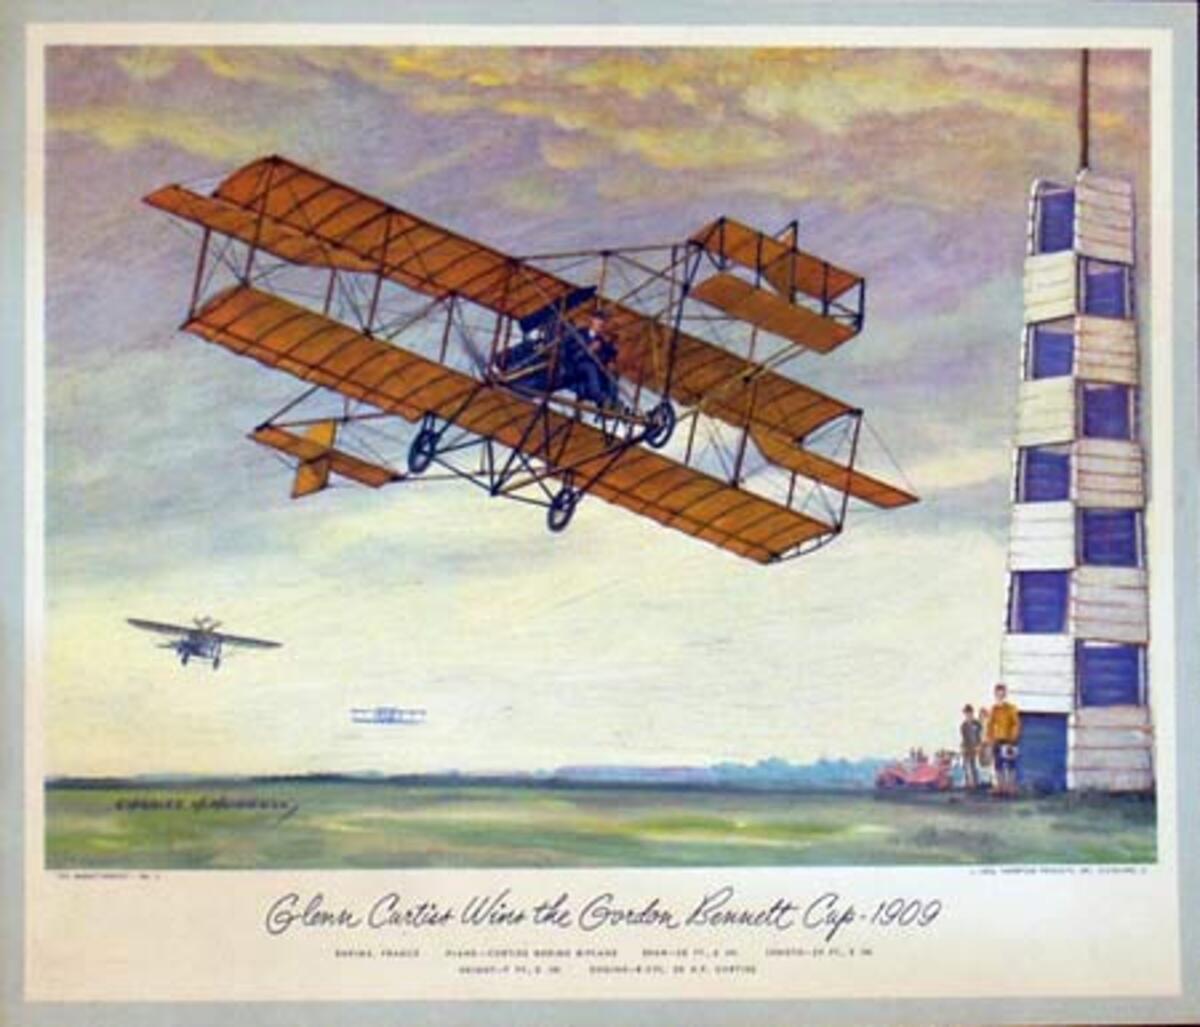 Vintgage Aviation Print  Glenn Curtis Wins the Gordon Bennet Cup 1909